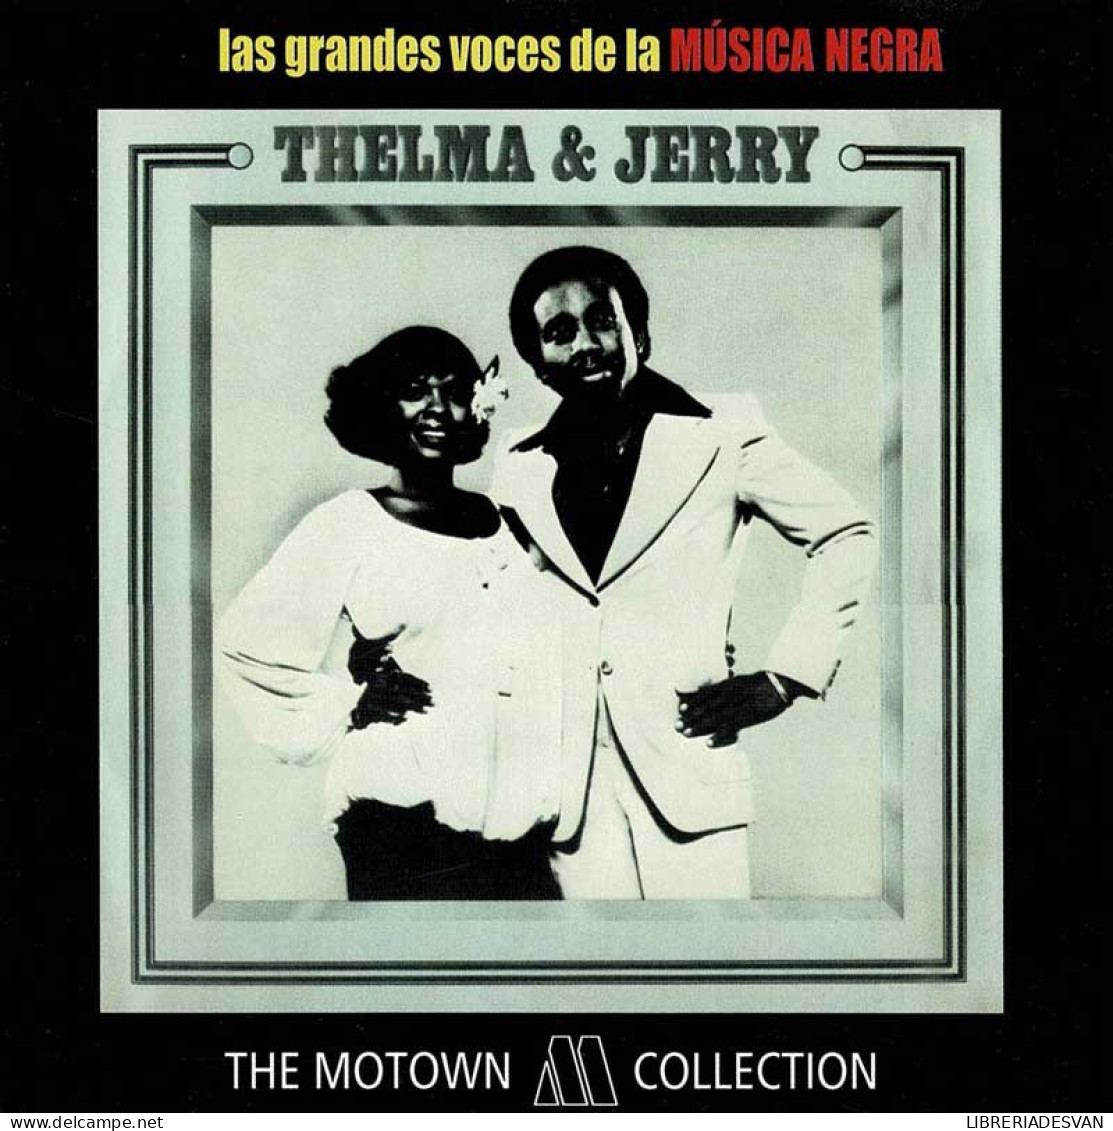 Las Grandes Voces De La Música Negra. Thelma Houston & Jerry Butler - Thelma & Jerry. CD - Jazz